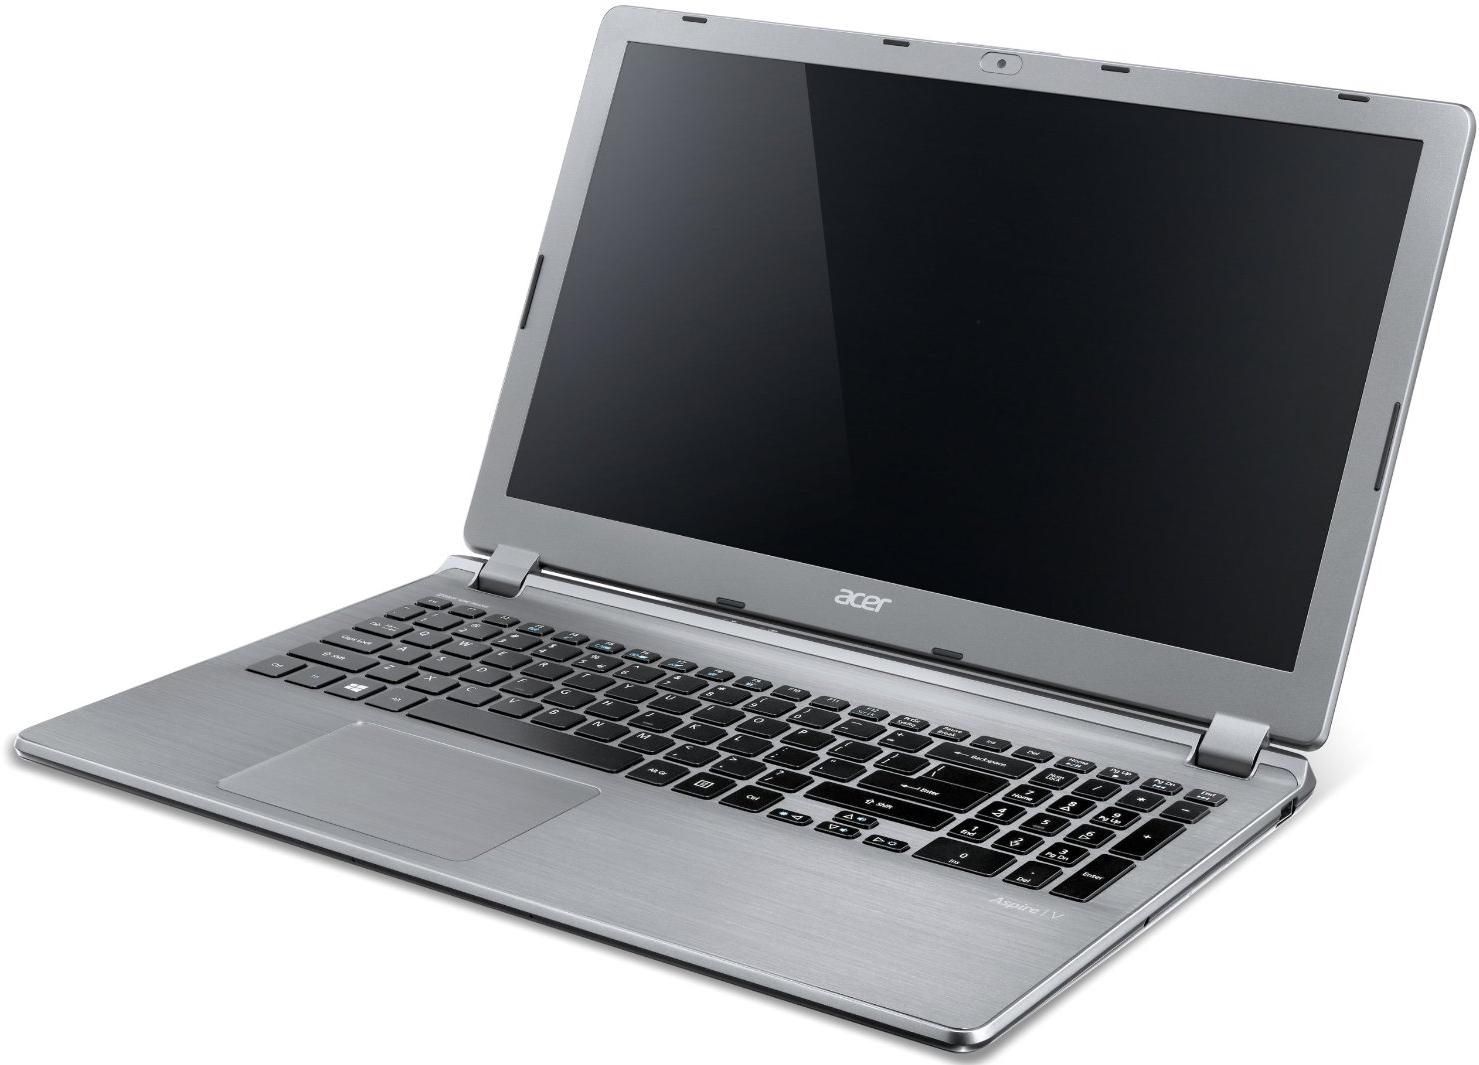   Acer Aspire E5-573G-533Z (NX.MVMER.101)  1